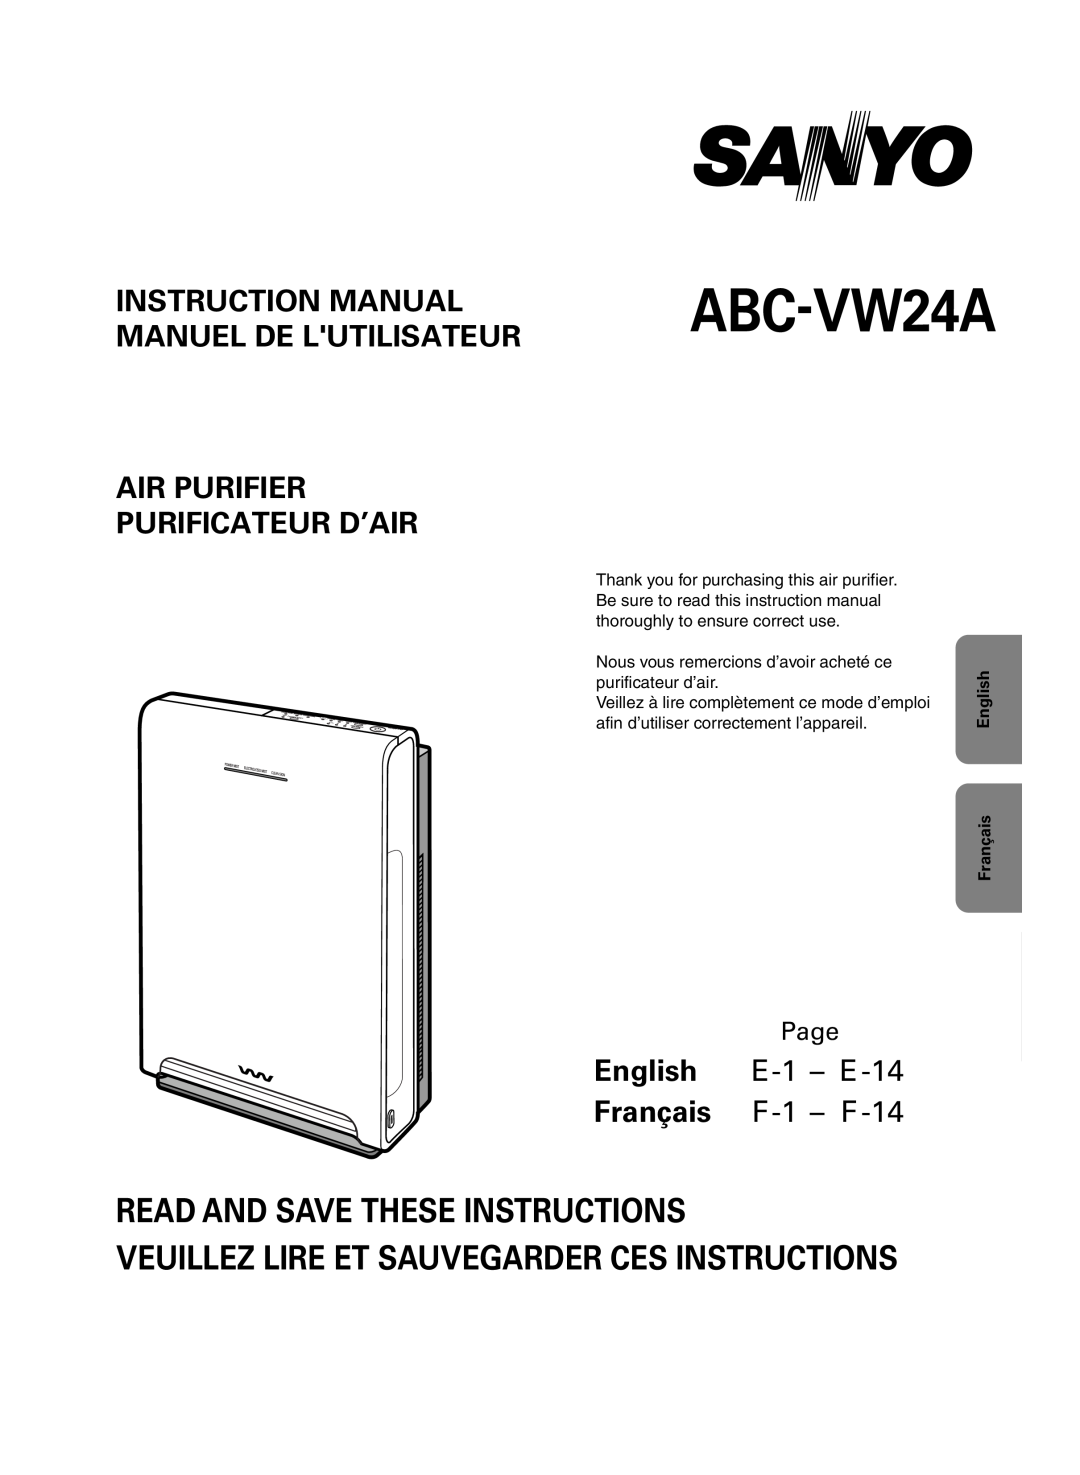 Sanyo ABC-VW24A instruction manual Read And Save These Instructions, Veuillez Lire Et Sauvegarder Ces Instructions, Page 